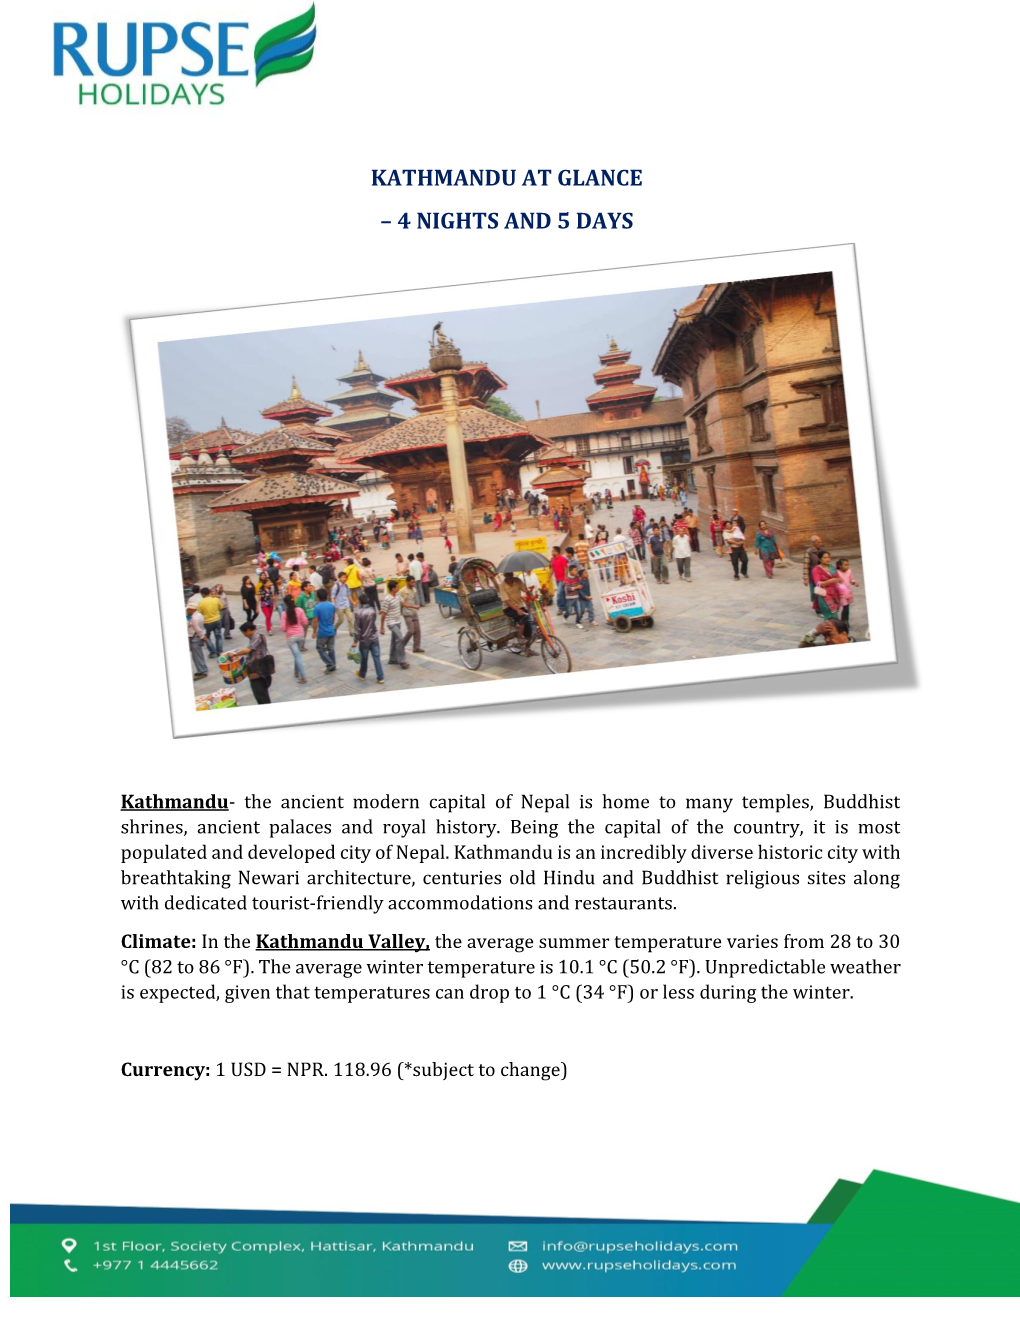 Kathmandu at Glance – 4 Nights and 5 Days